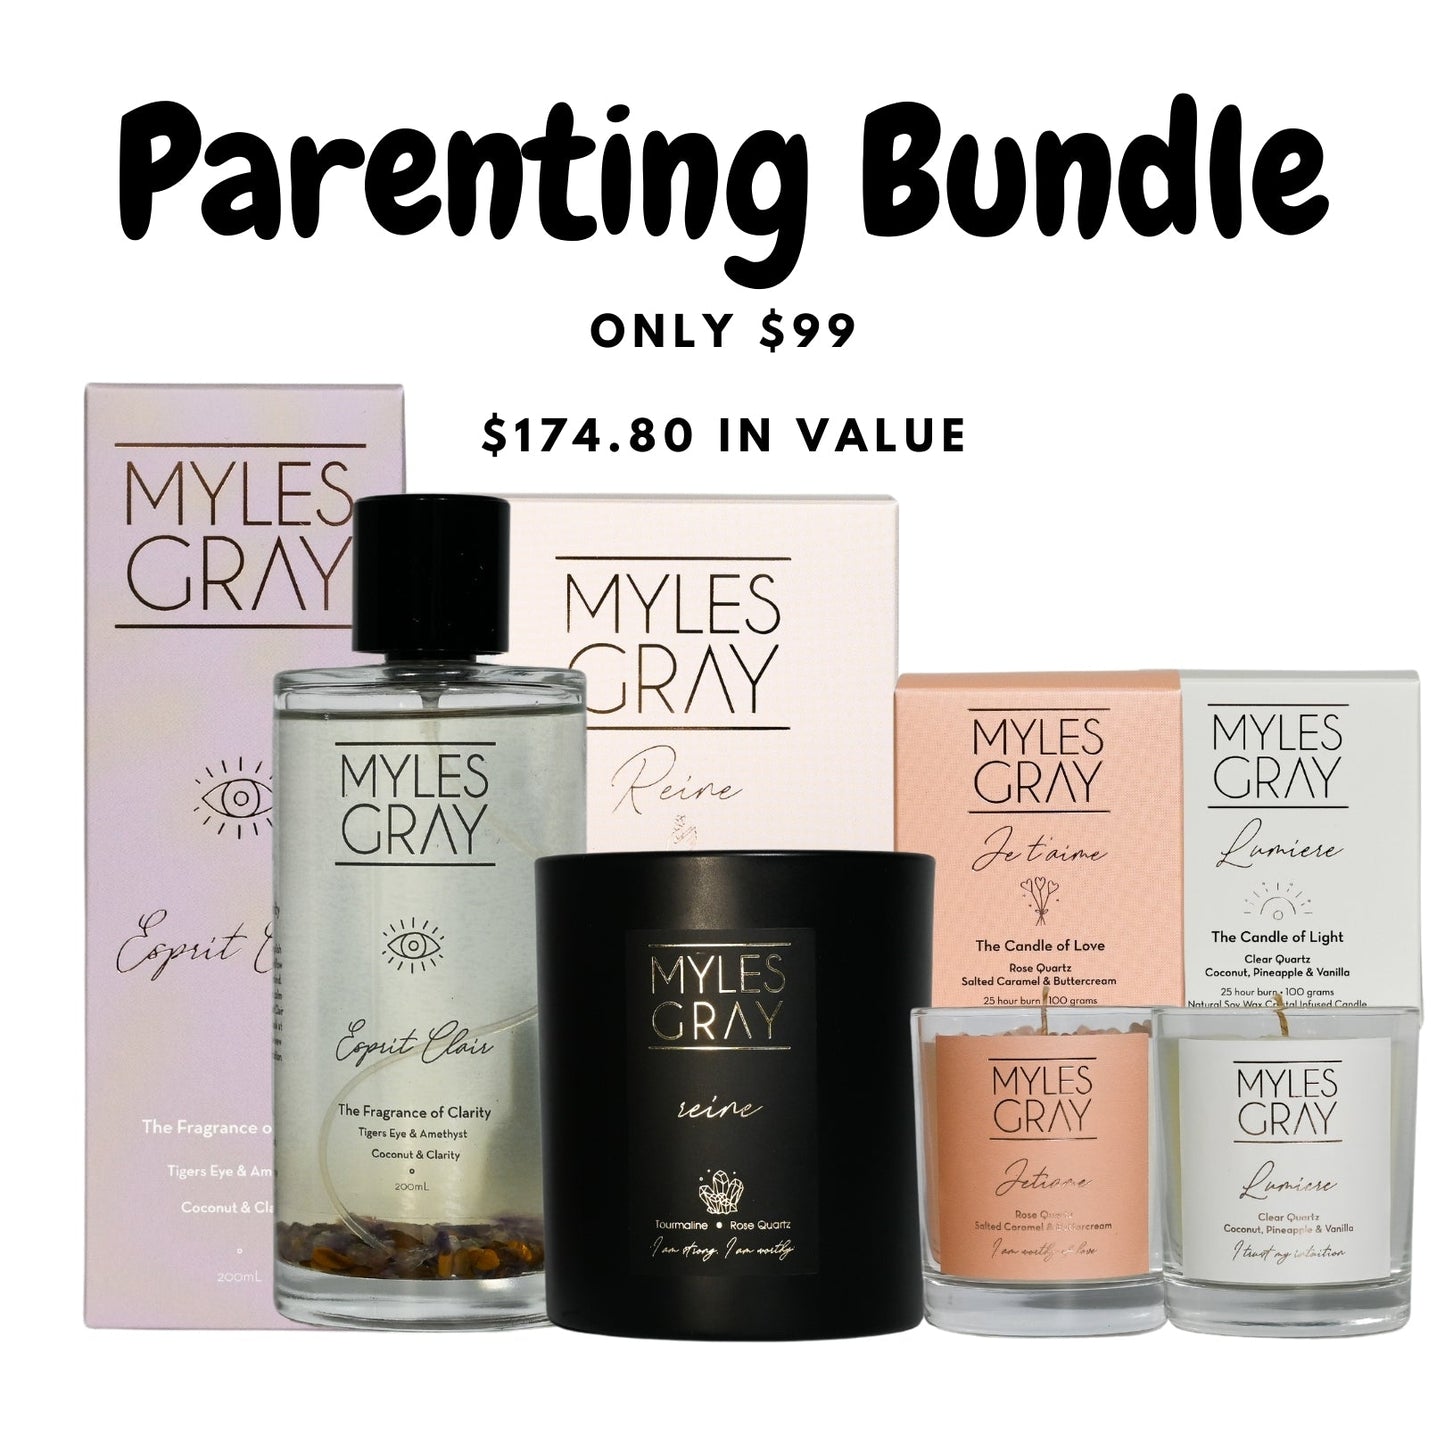 Parenting Bundle - Myles Gray